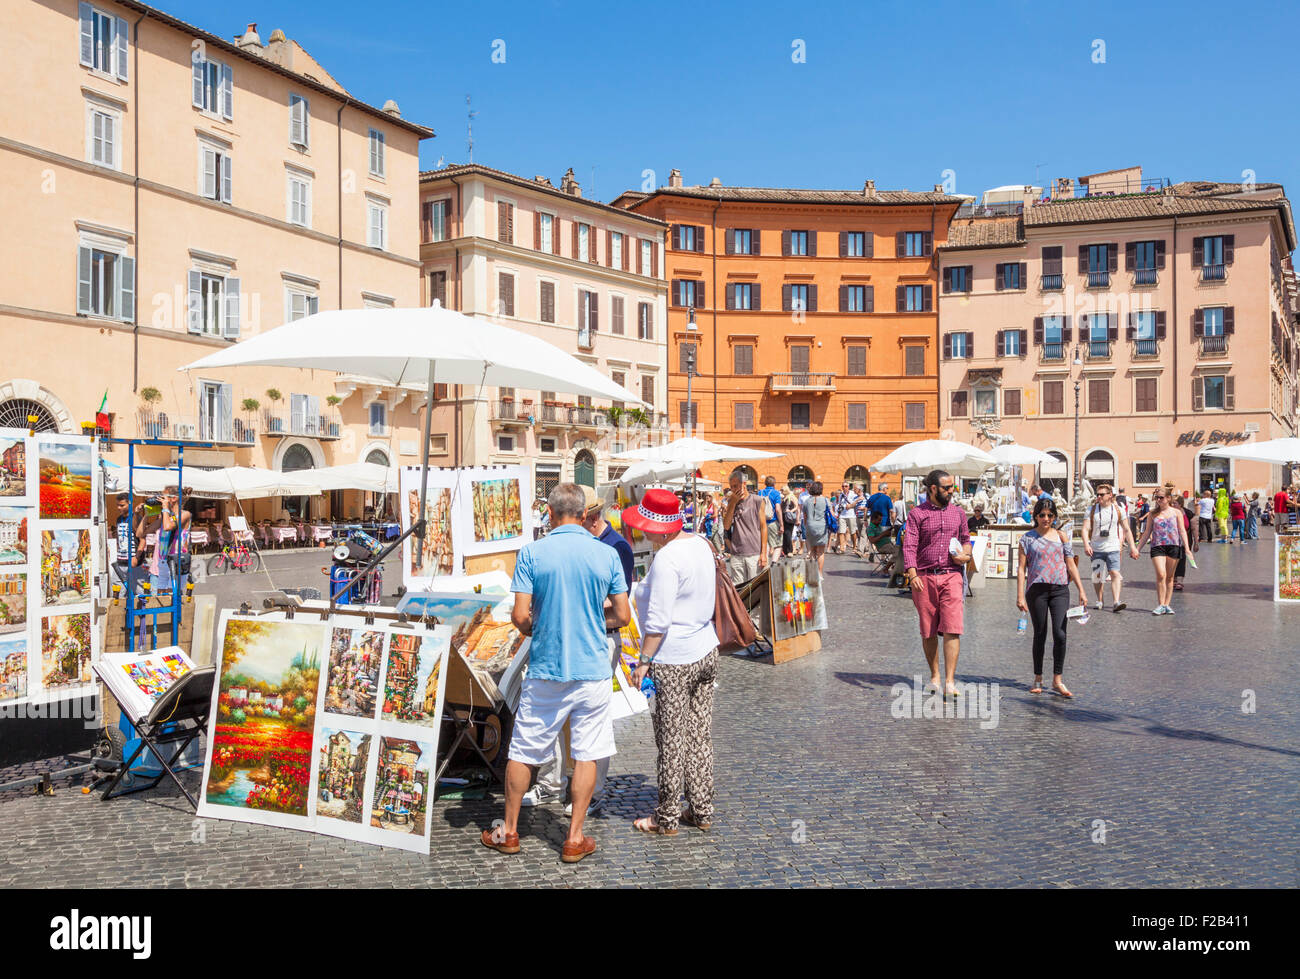 Artistas pintando y vendiendo ilustraciones en la Piazza Navona Roma Italia Roma Lazio Italia Europa ue Foto de stock